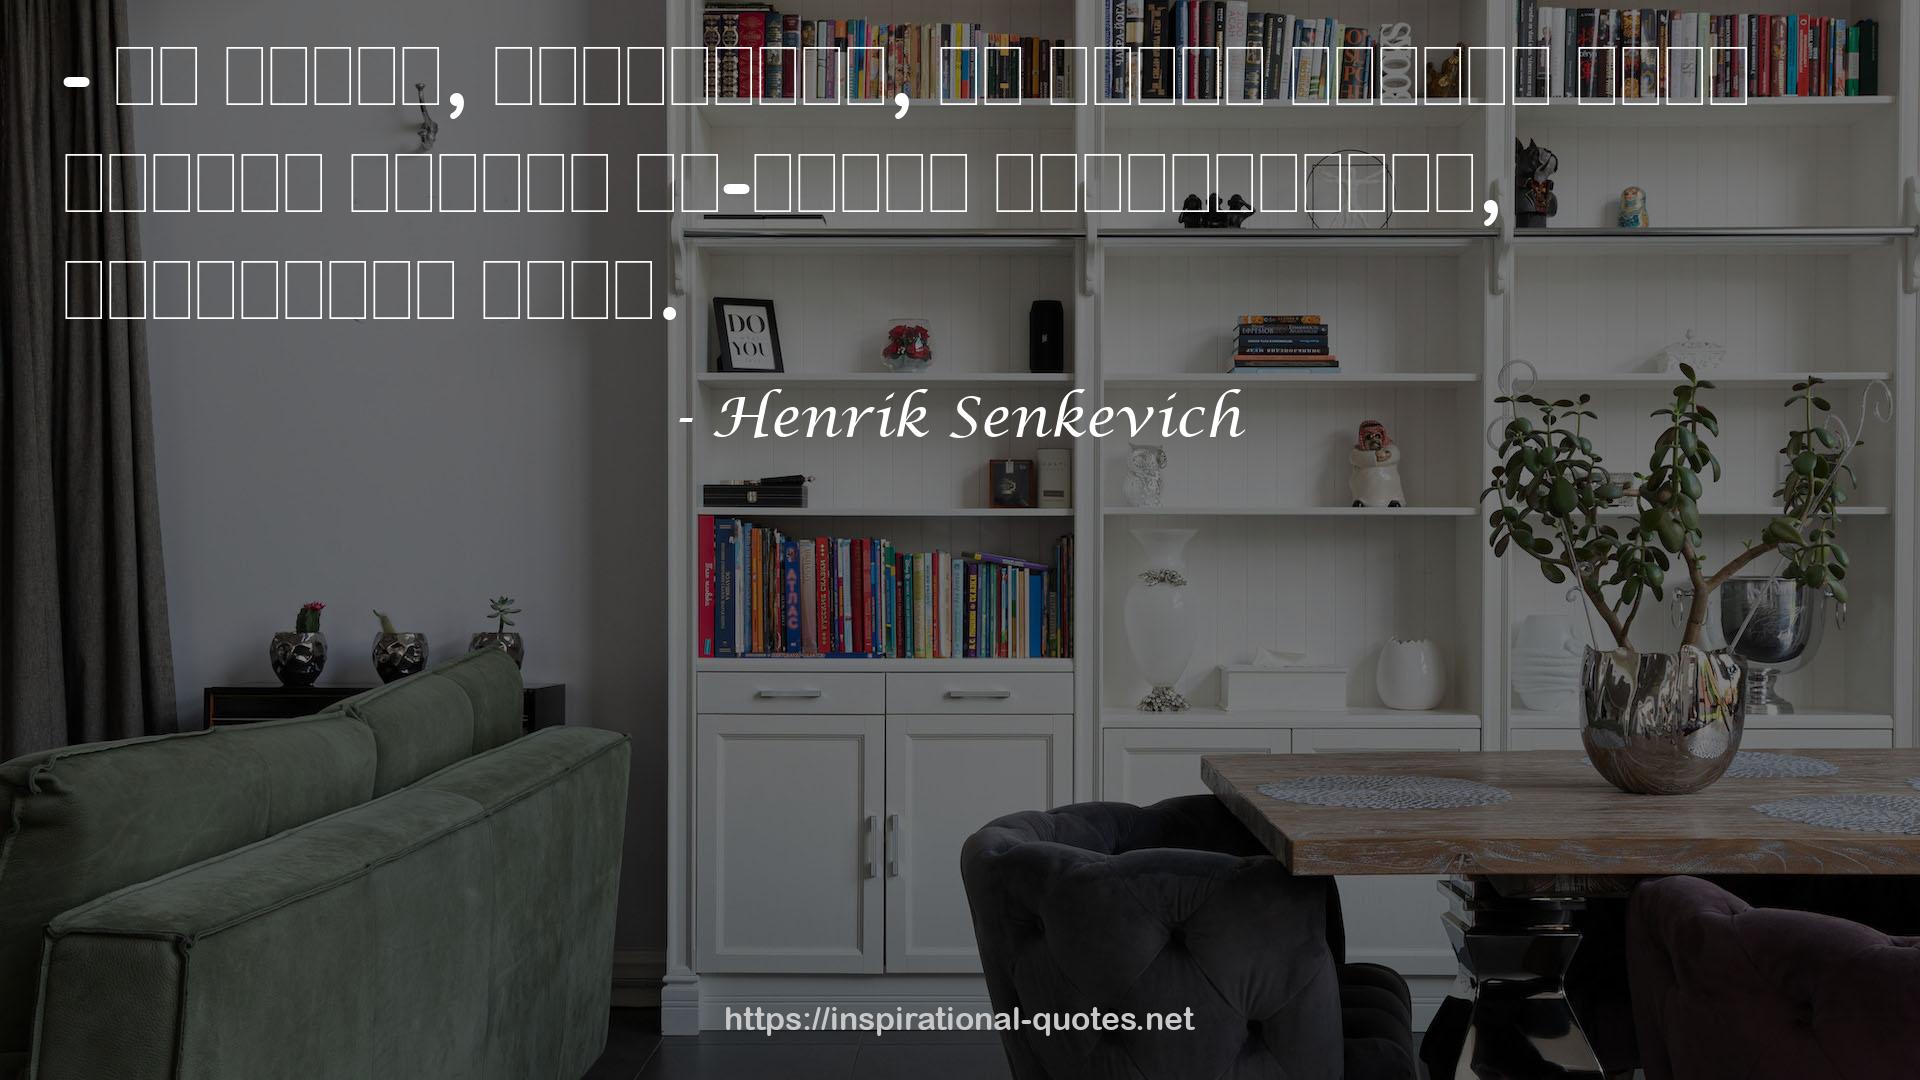 Henrik Senkevich QUOTES